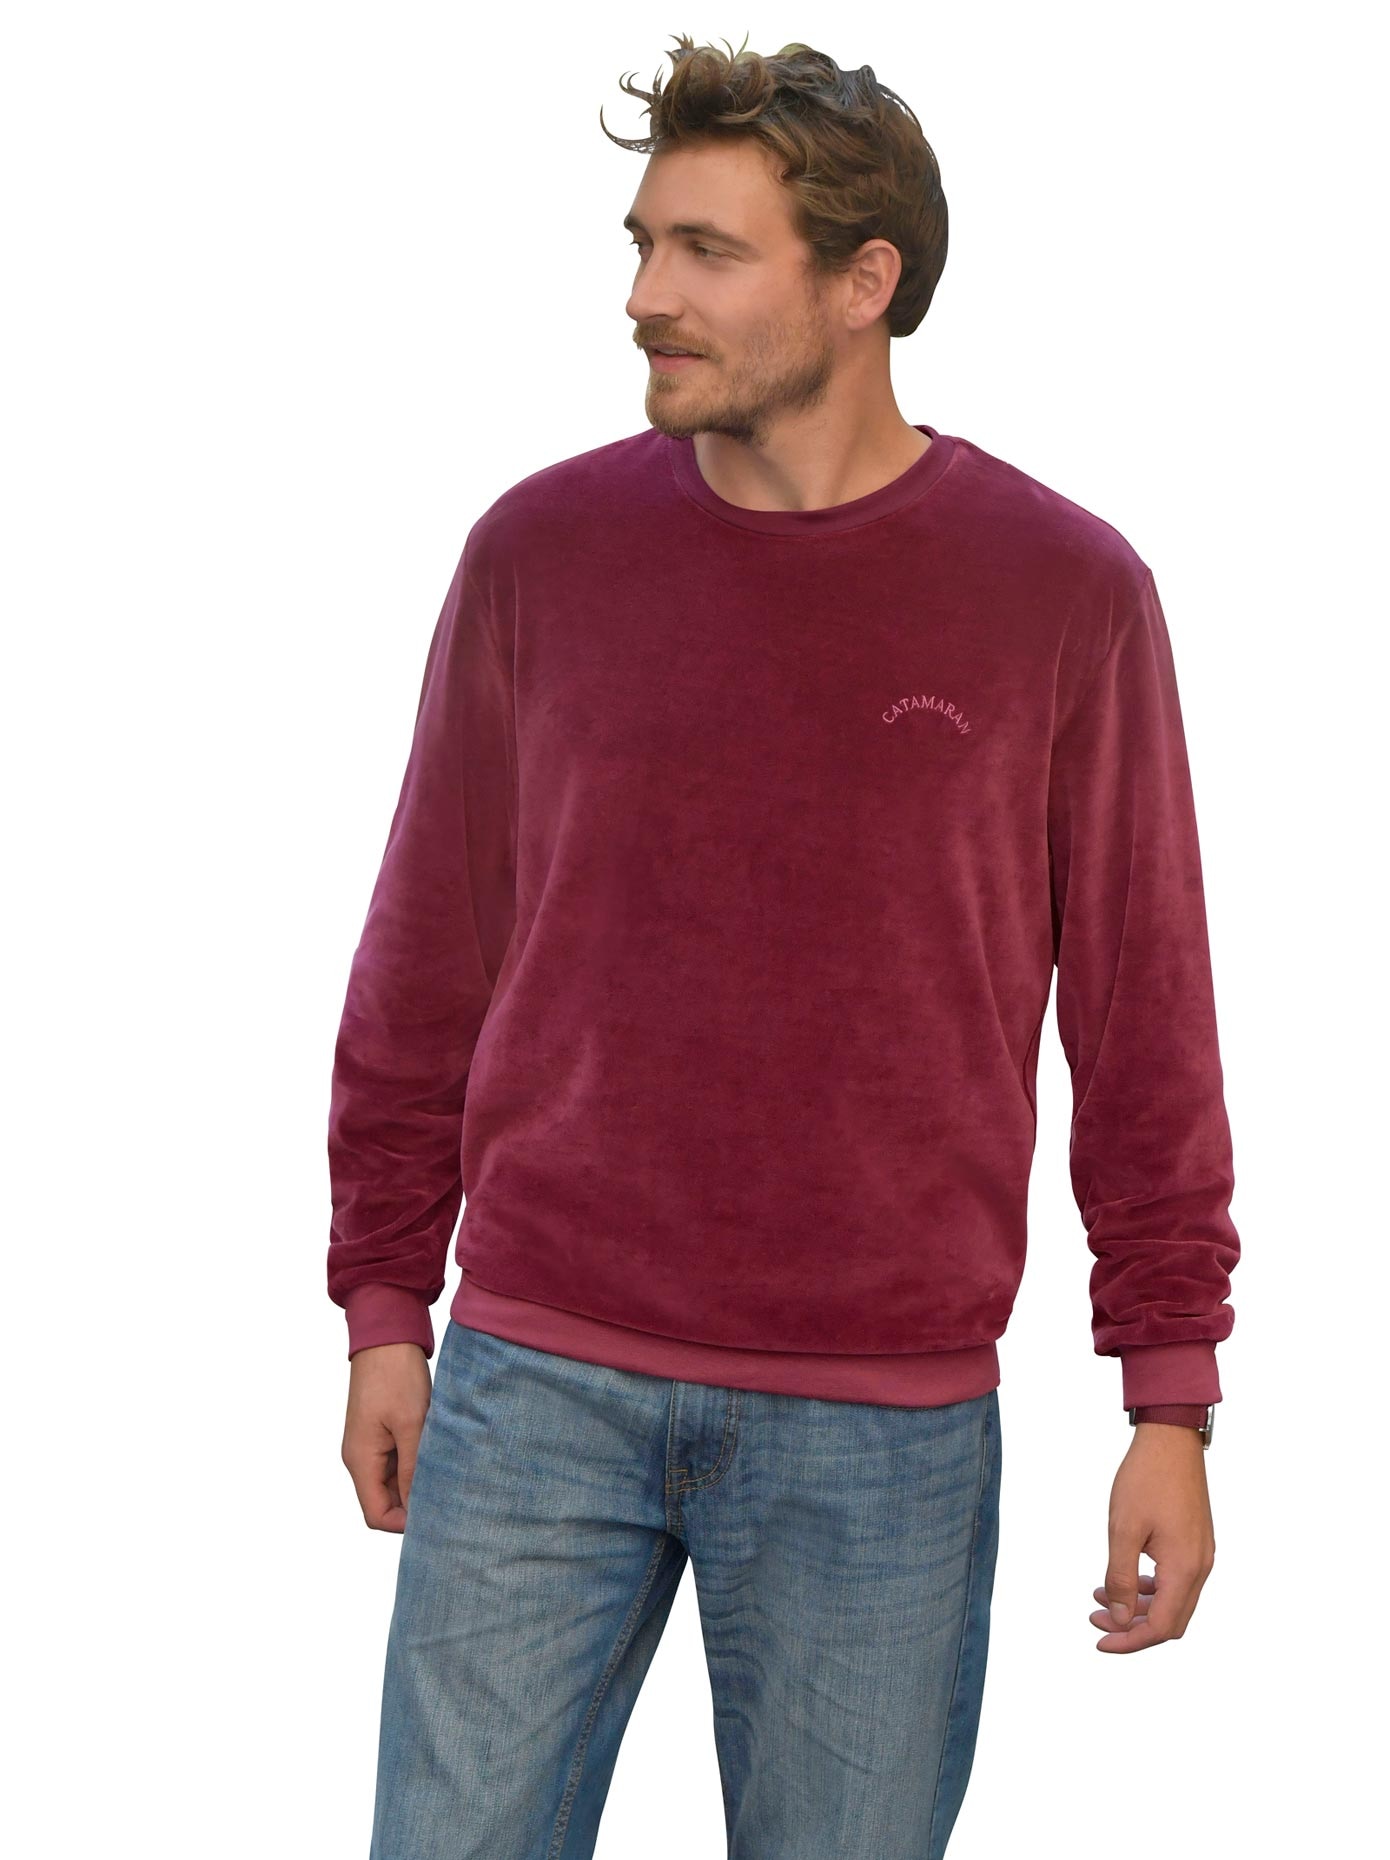 RAGMAN Sweatshirt online shoppen bei OTTO